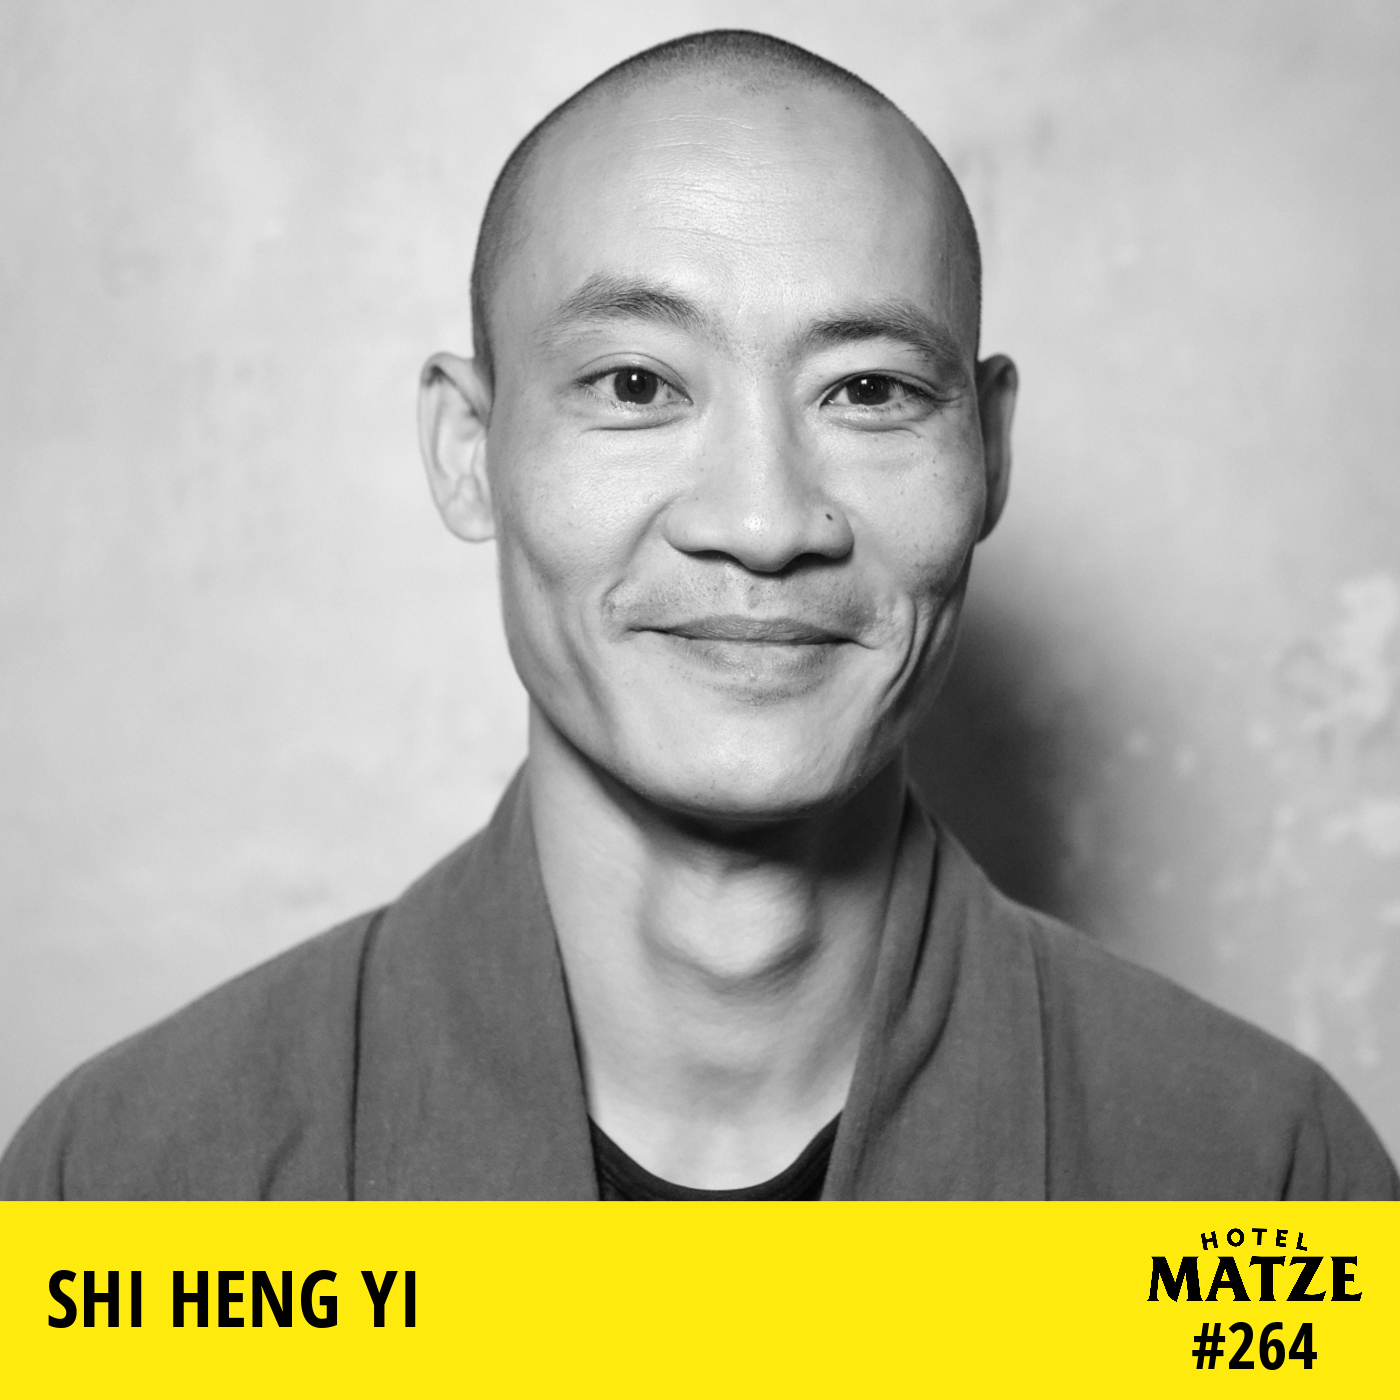 Shaolin-Meister Shi Heng Yi – Wie schafft man es loszulassen?